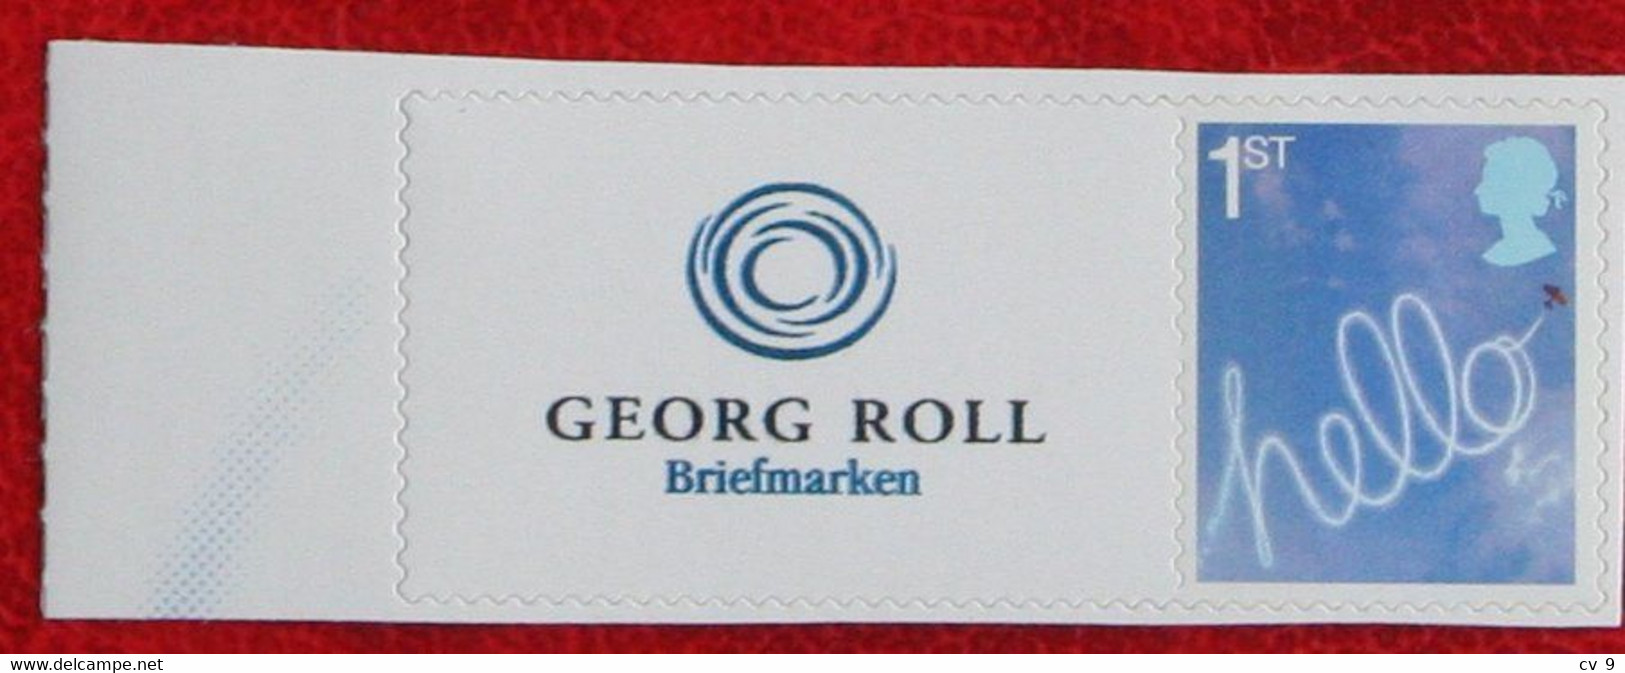 Smiler Smilers Personal Stamp Georg Roll Briefmarken HELLO  POSTFRIS MNH ** ENGLAND GRANDE-BRETAGNE GB GREAT BRITAIN - Francobolli Personalizzati